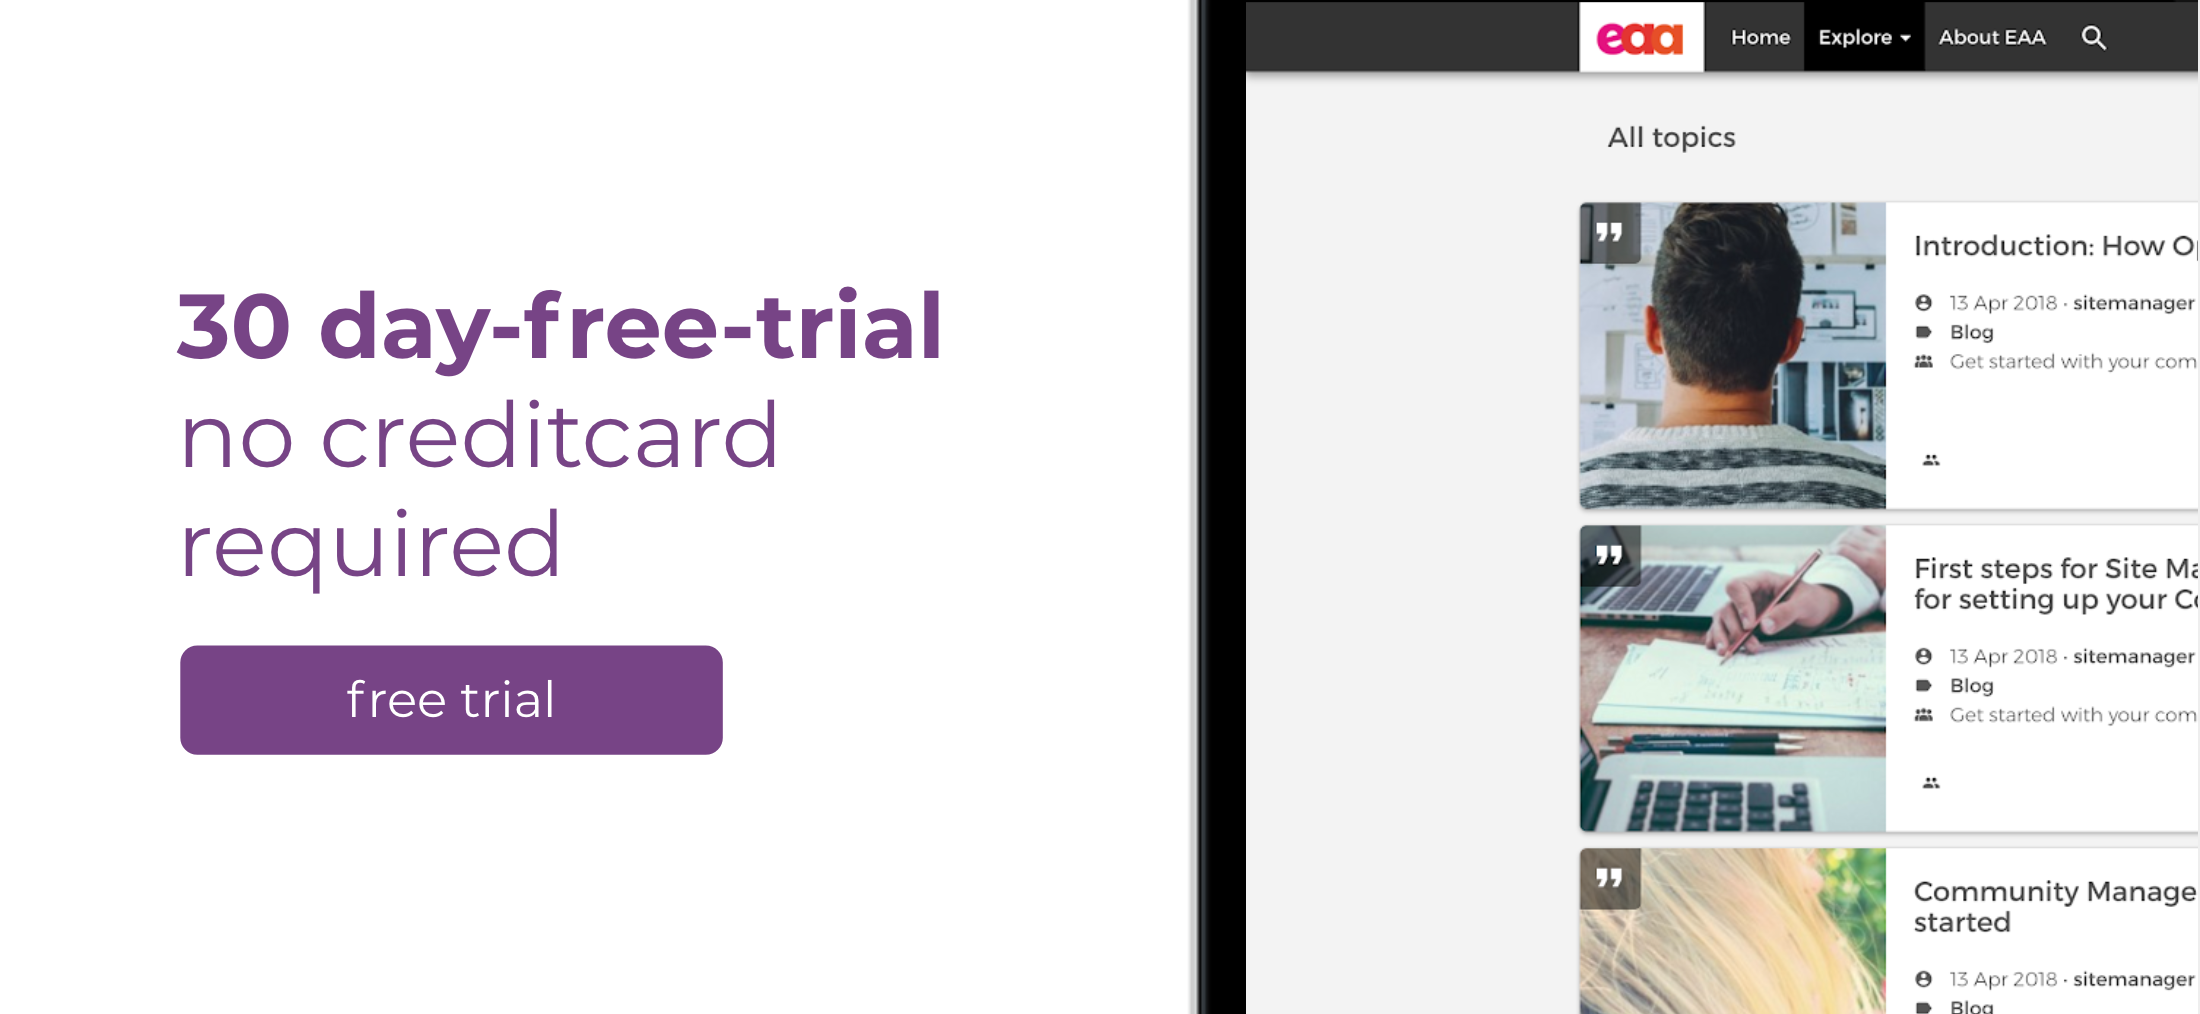 eLearning platform free trial of Open Social